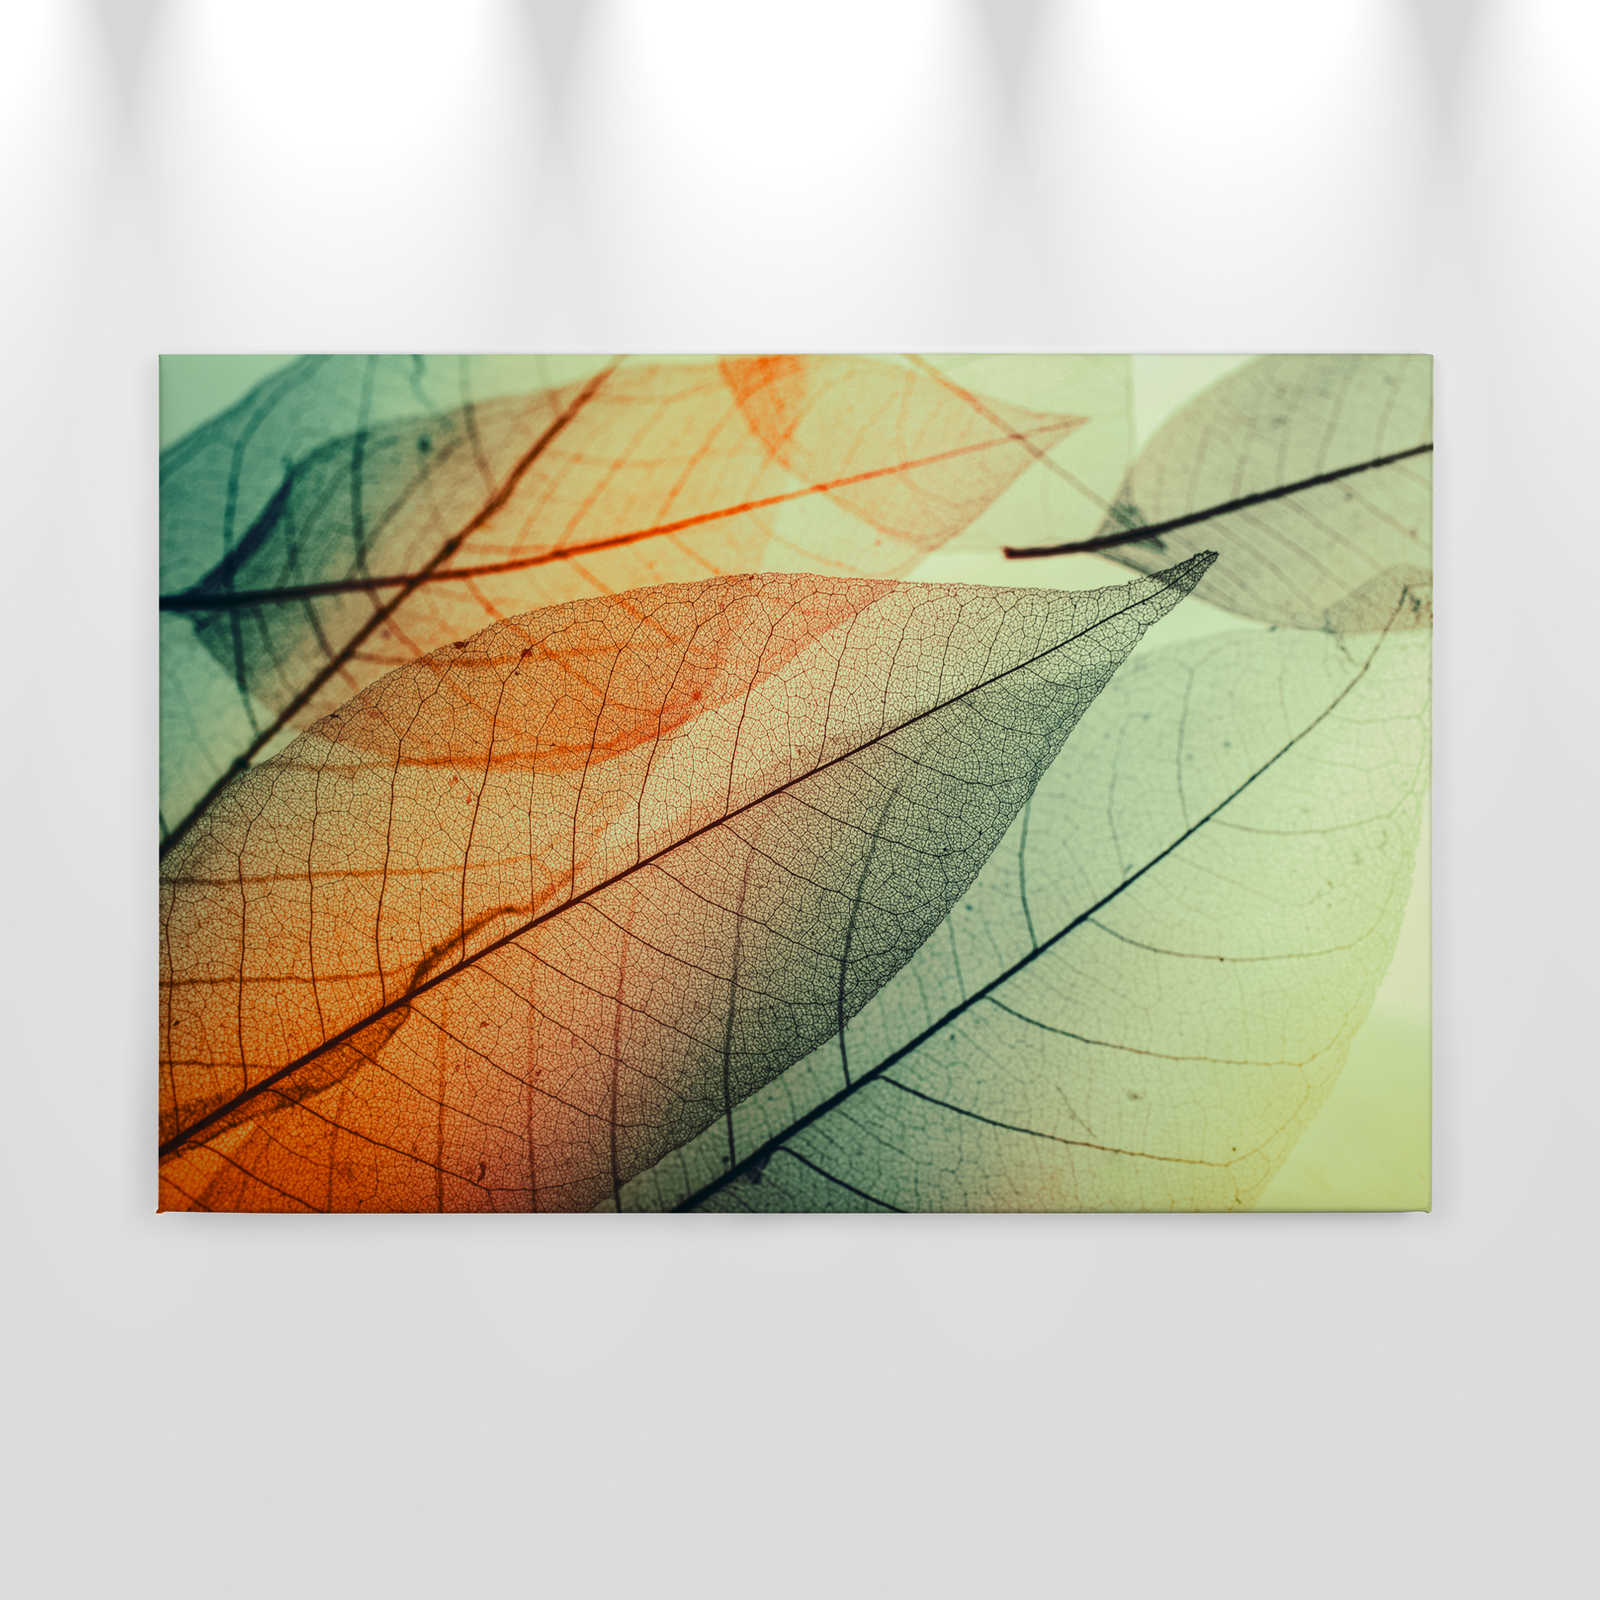             Canvas met bladerenontwerp - 0,90 m x 0,60 m
        